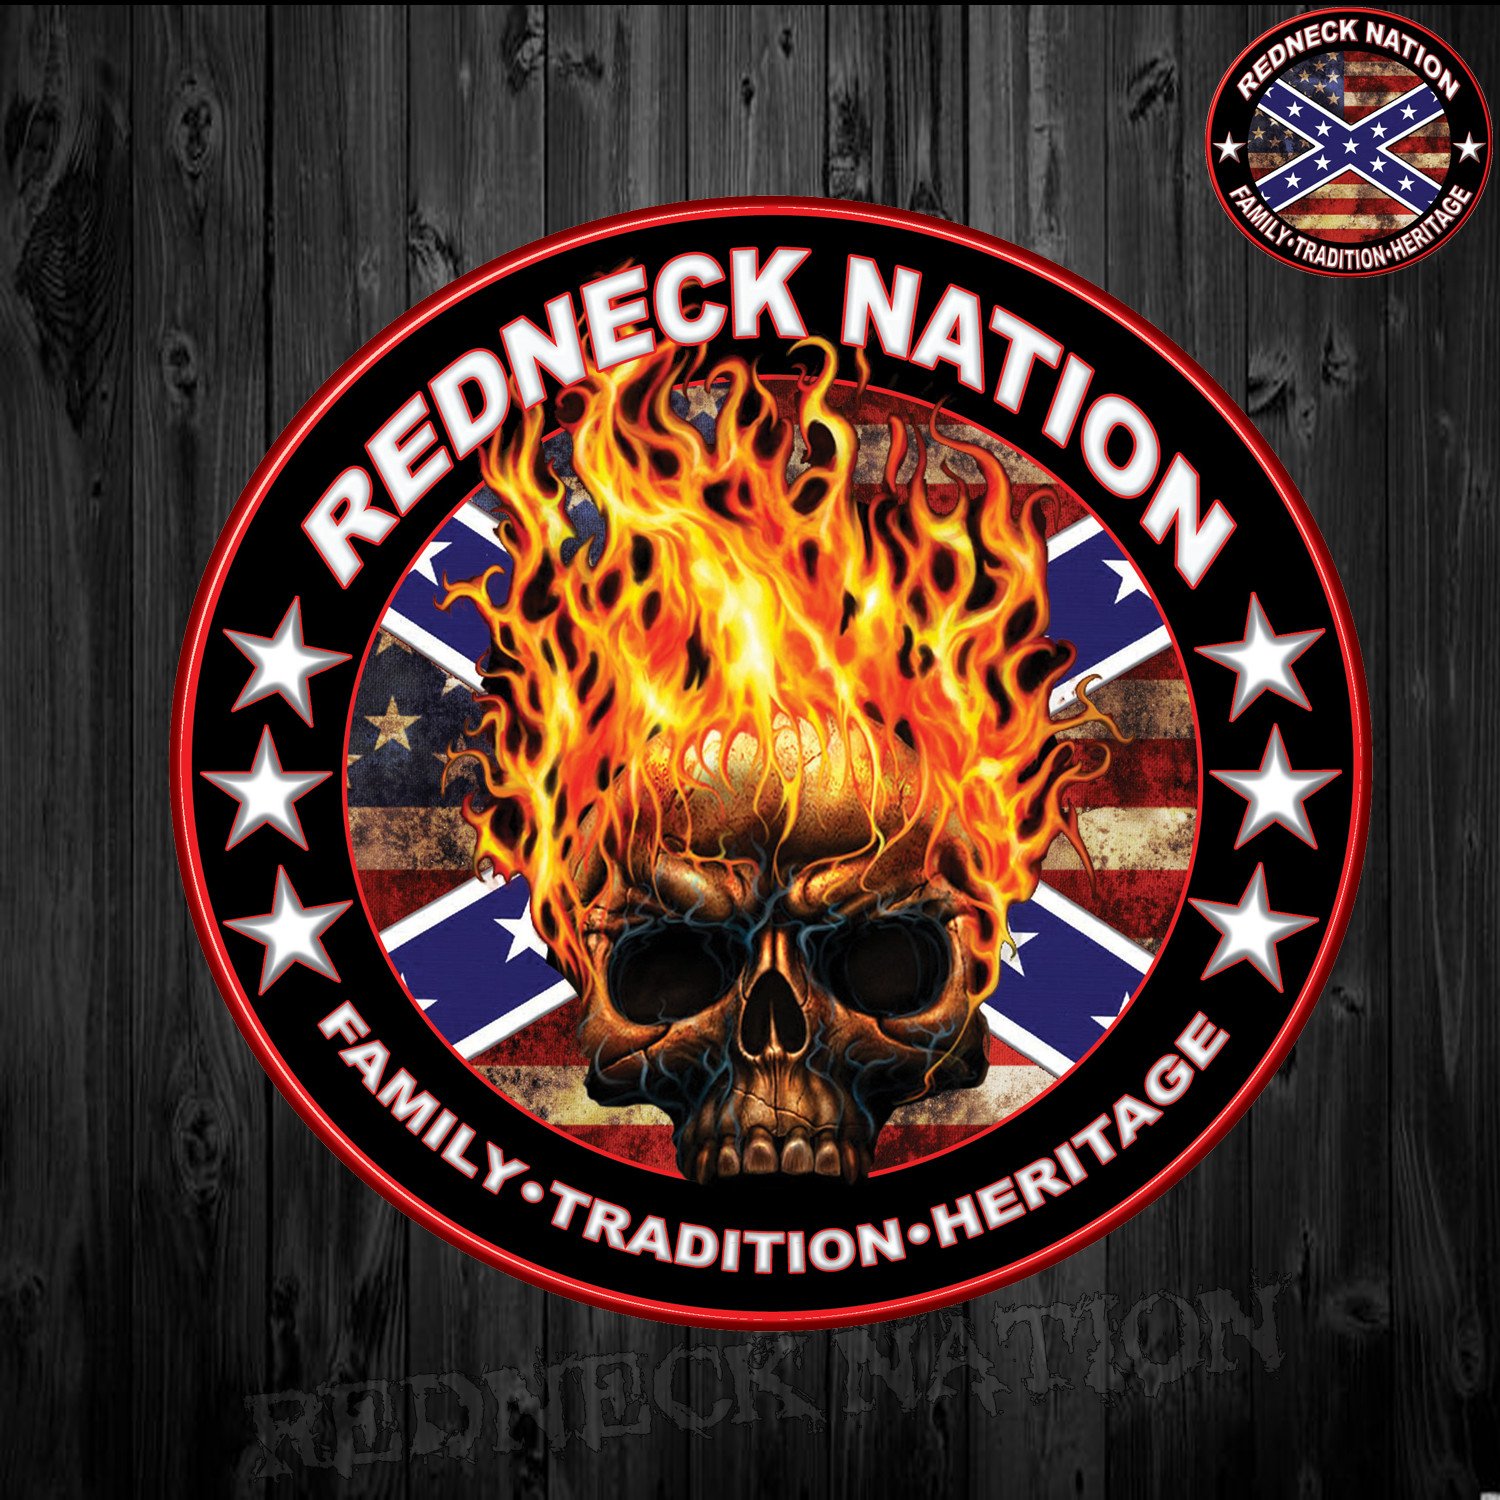 Redneck nation. 